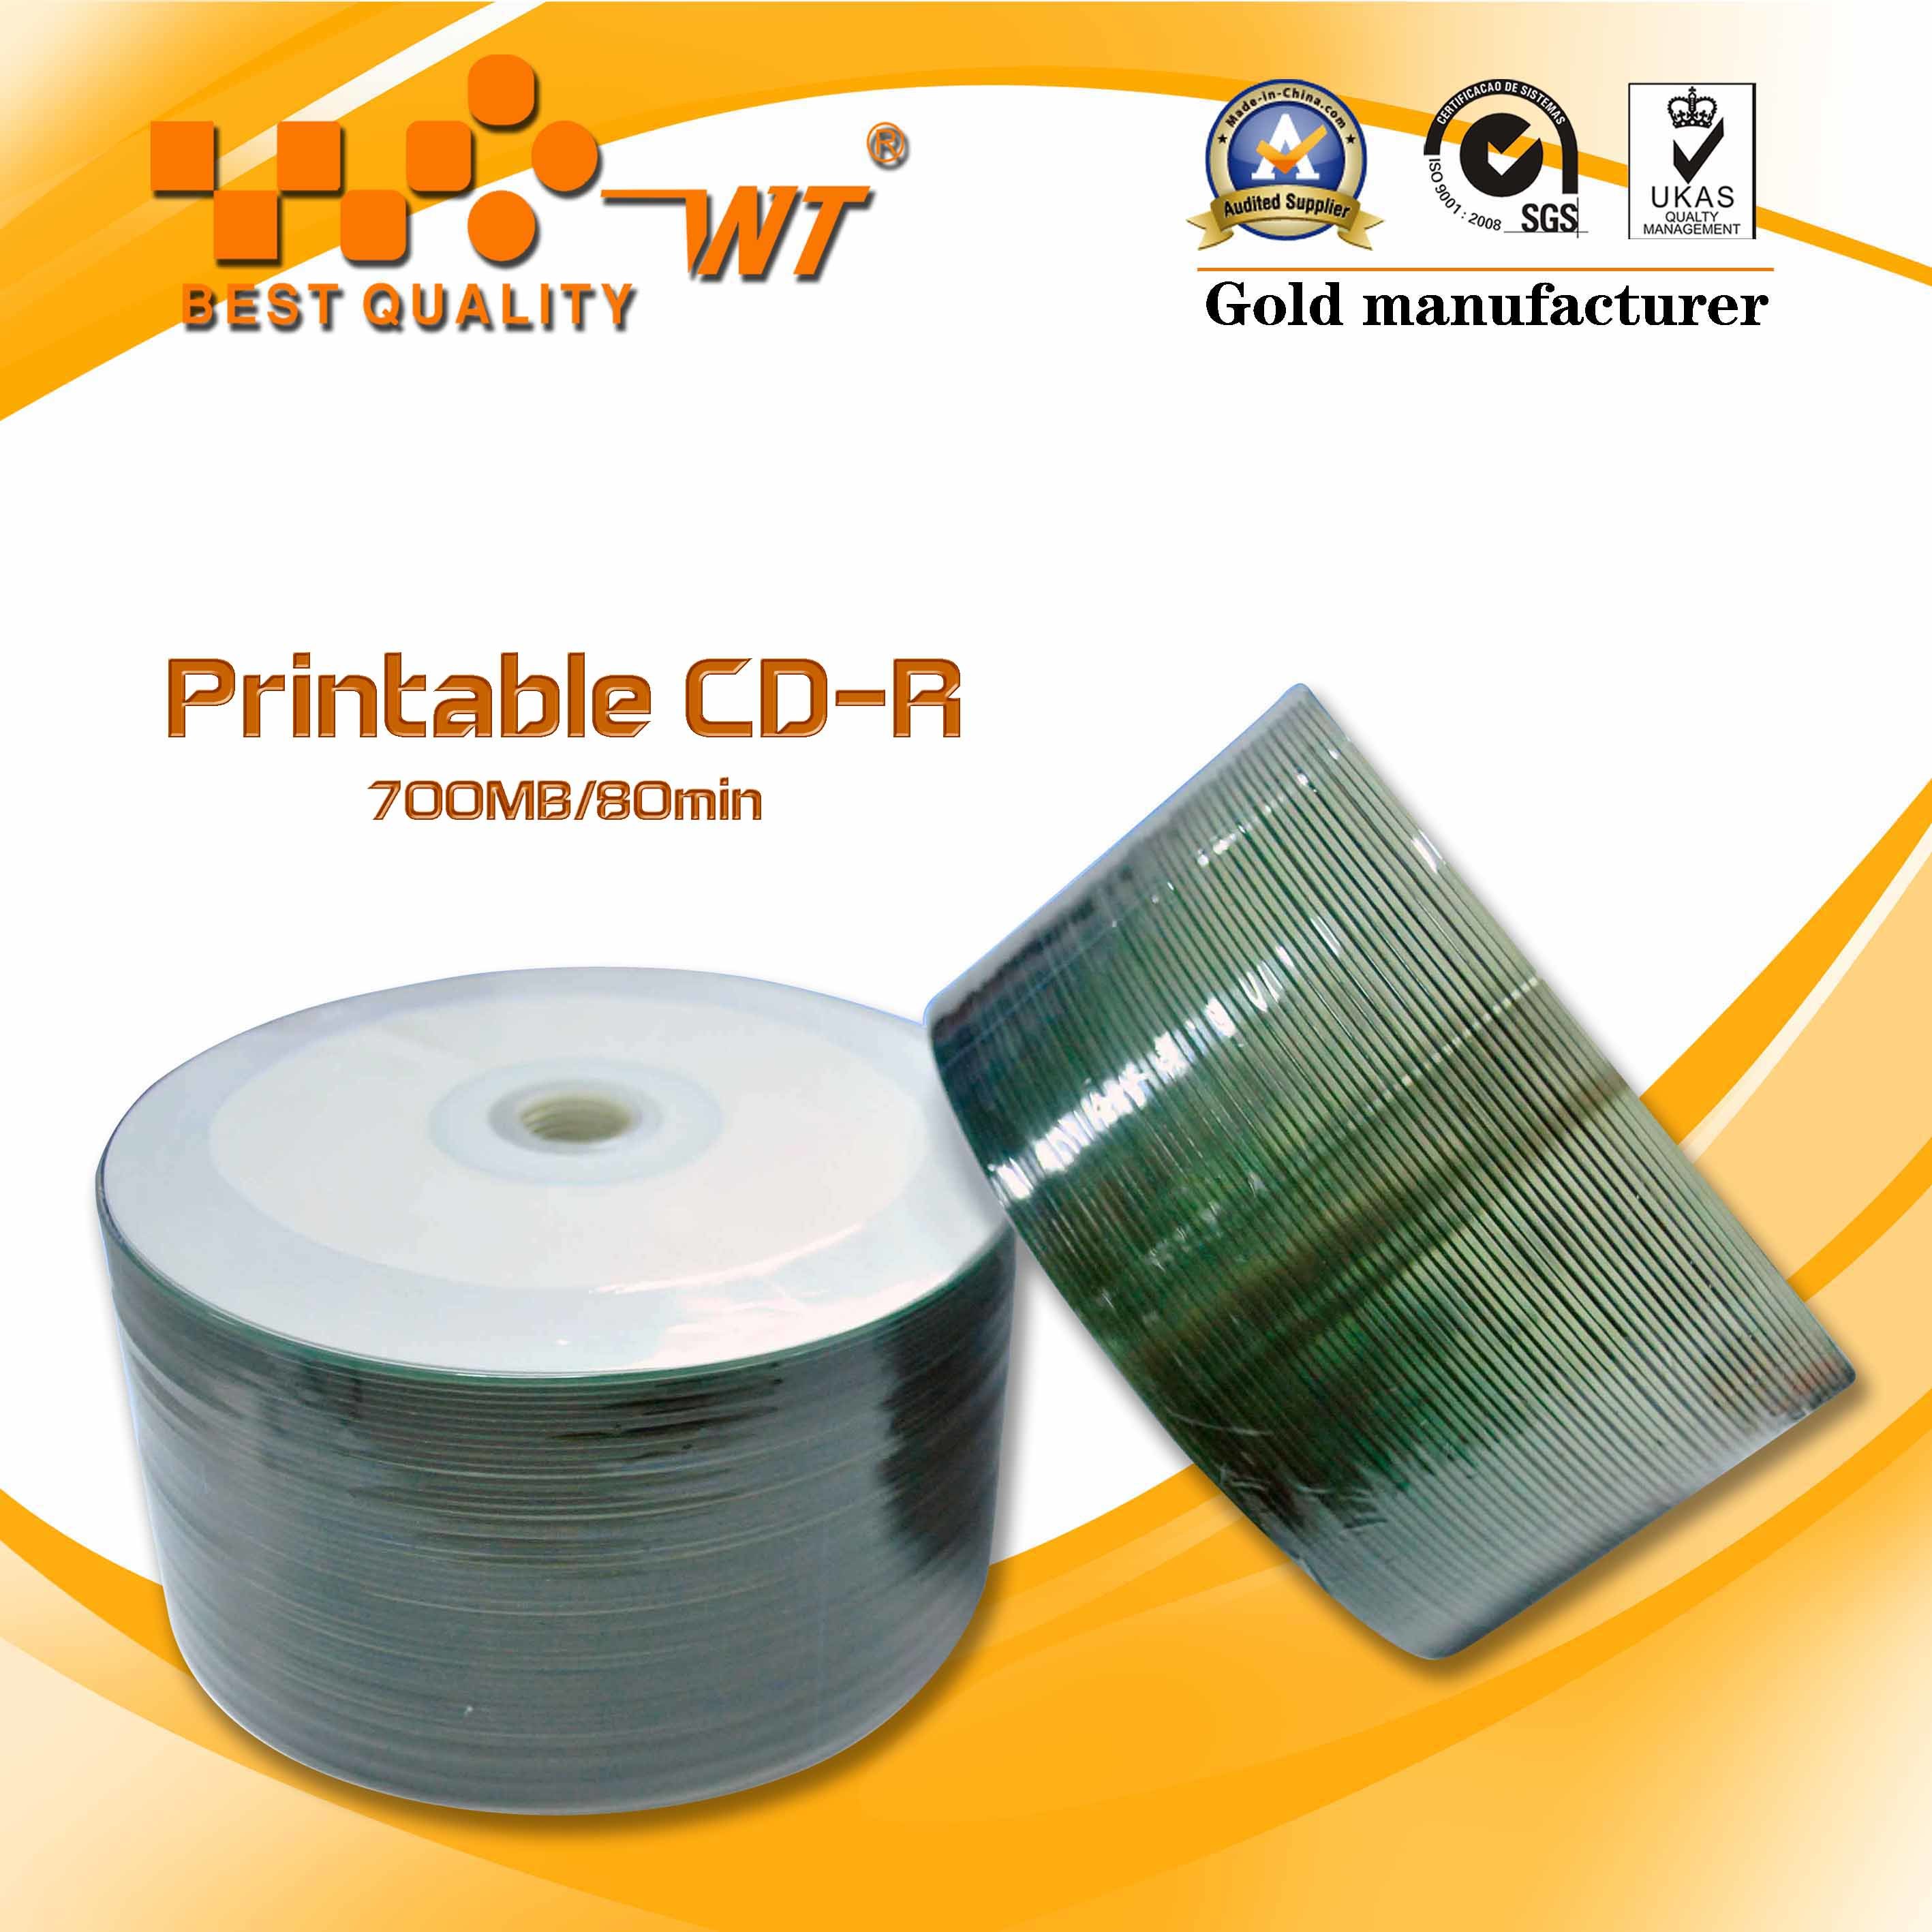 CD-R Printable Blank Disc (WT-Printable CD-R)